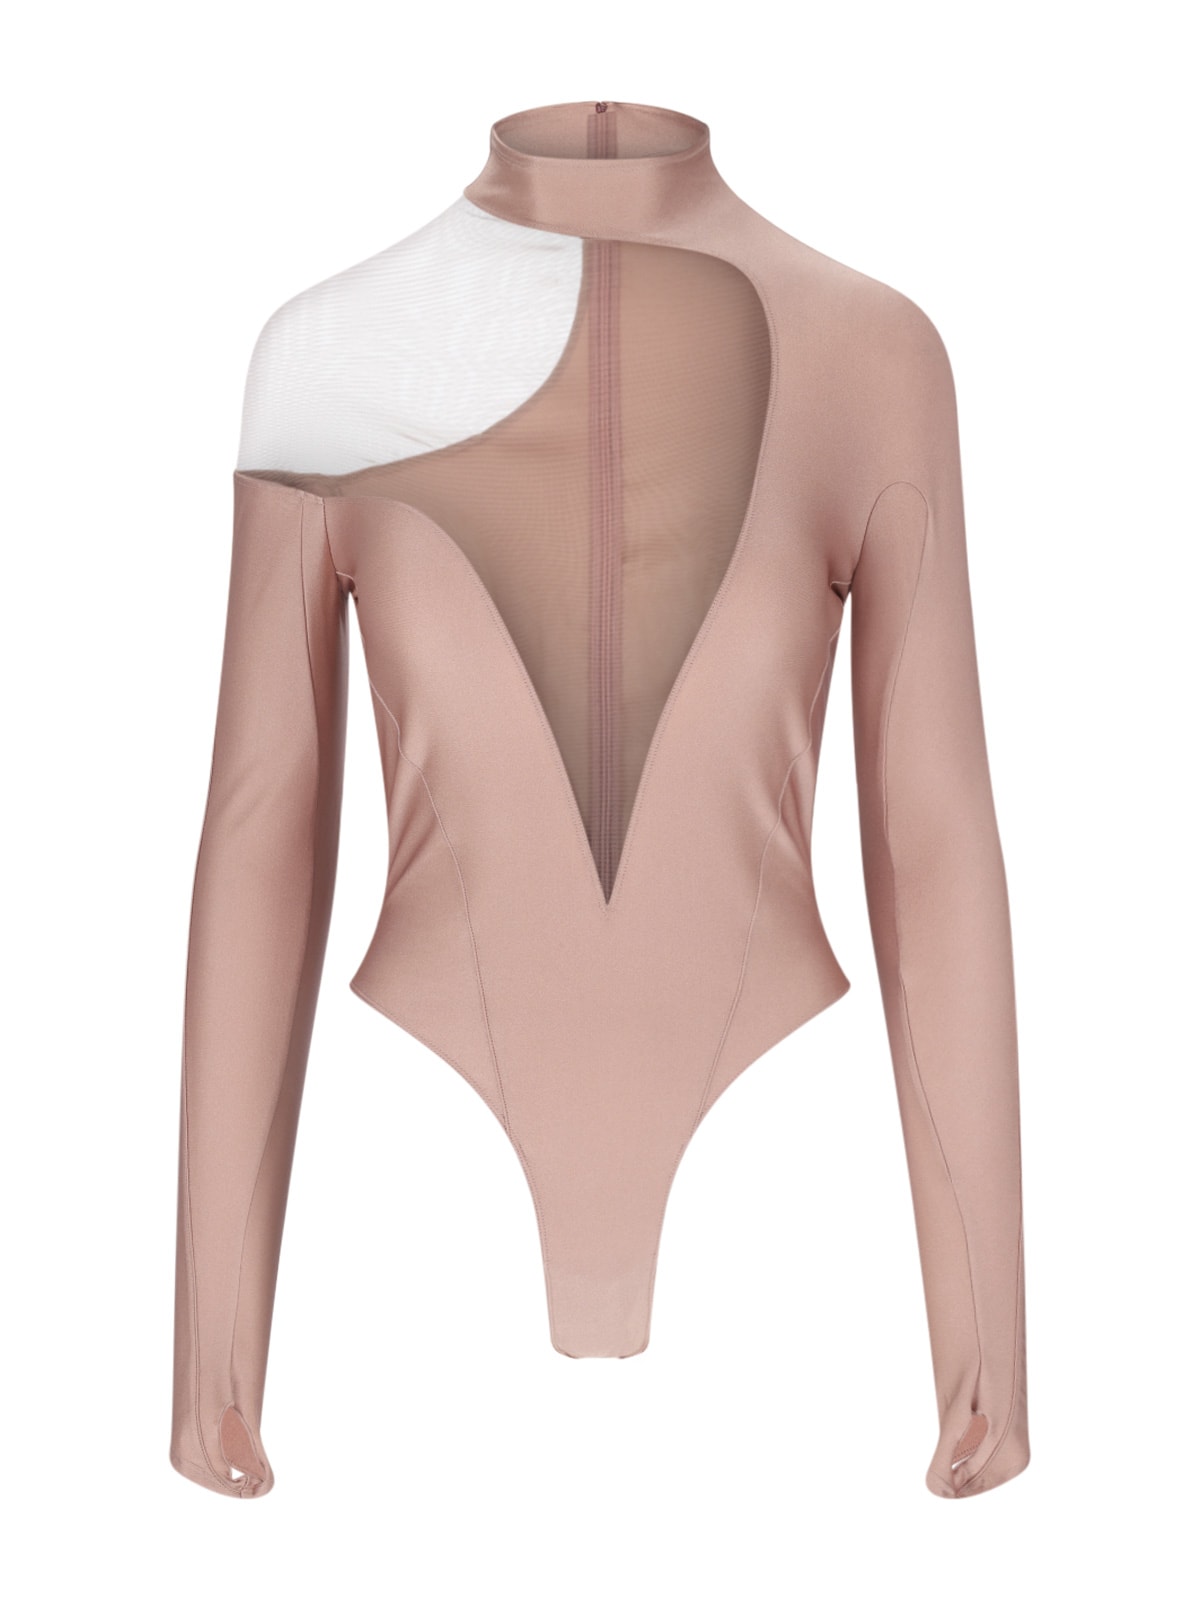 asymmetric Illusion Bodysuit